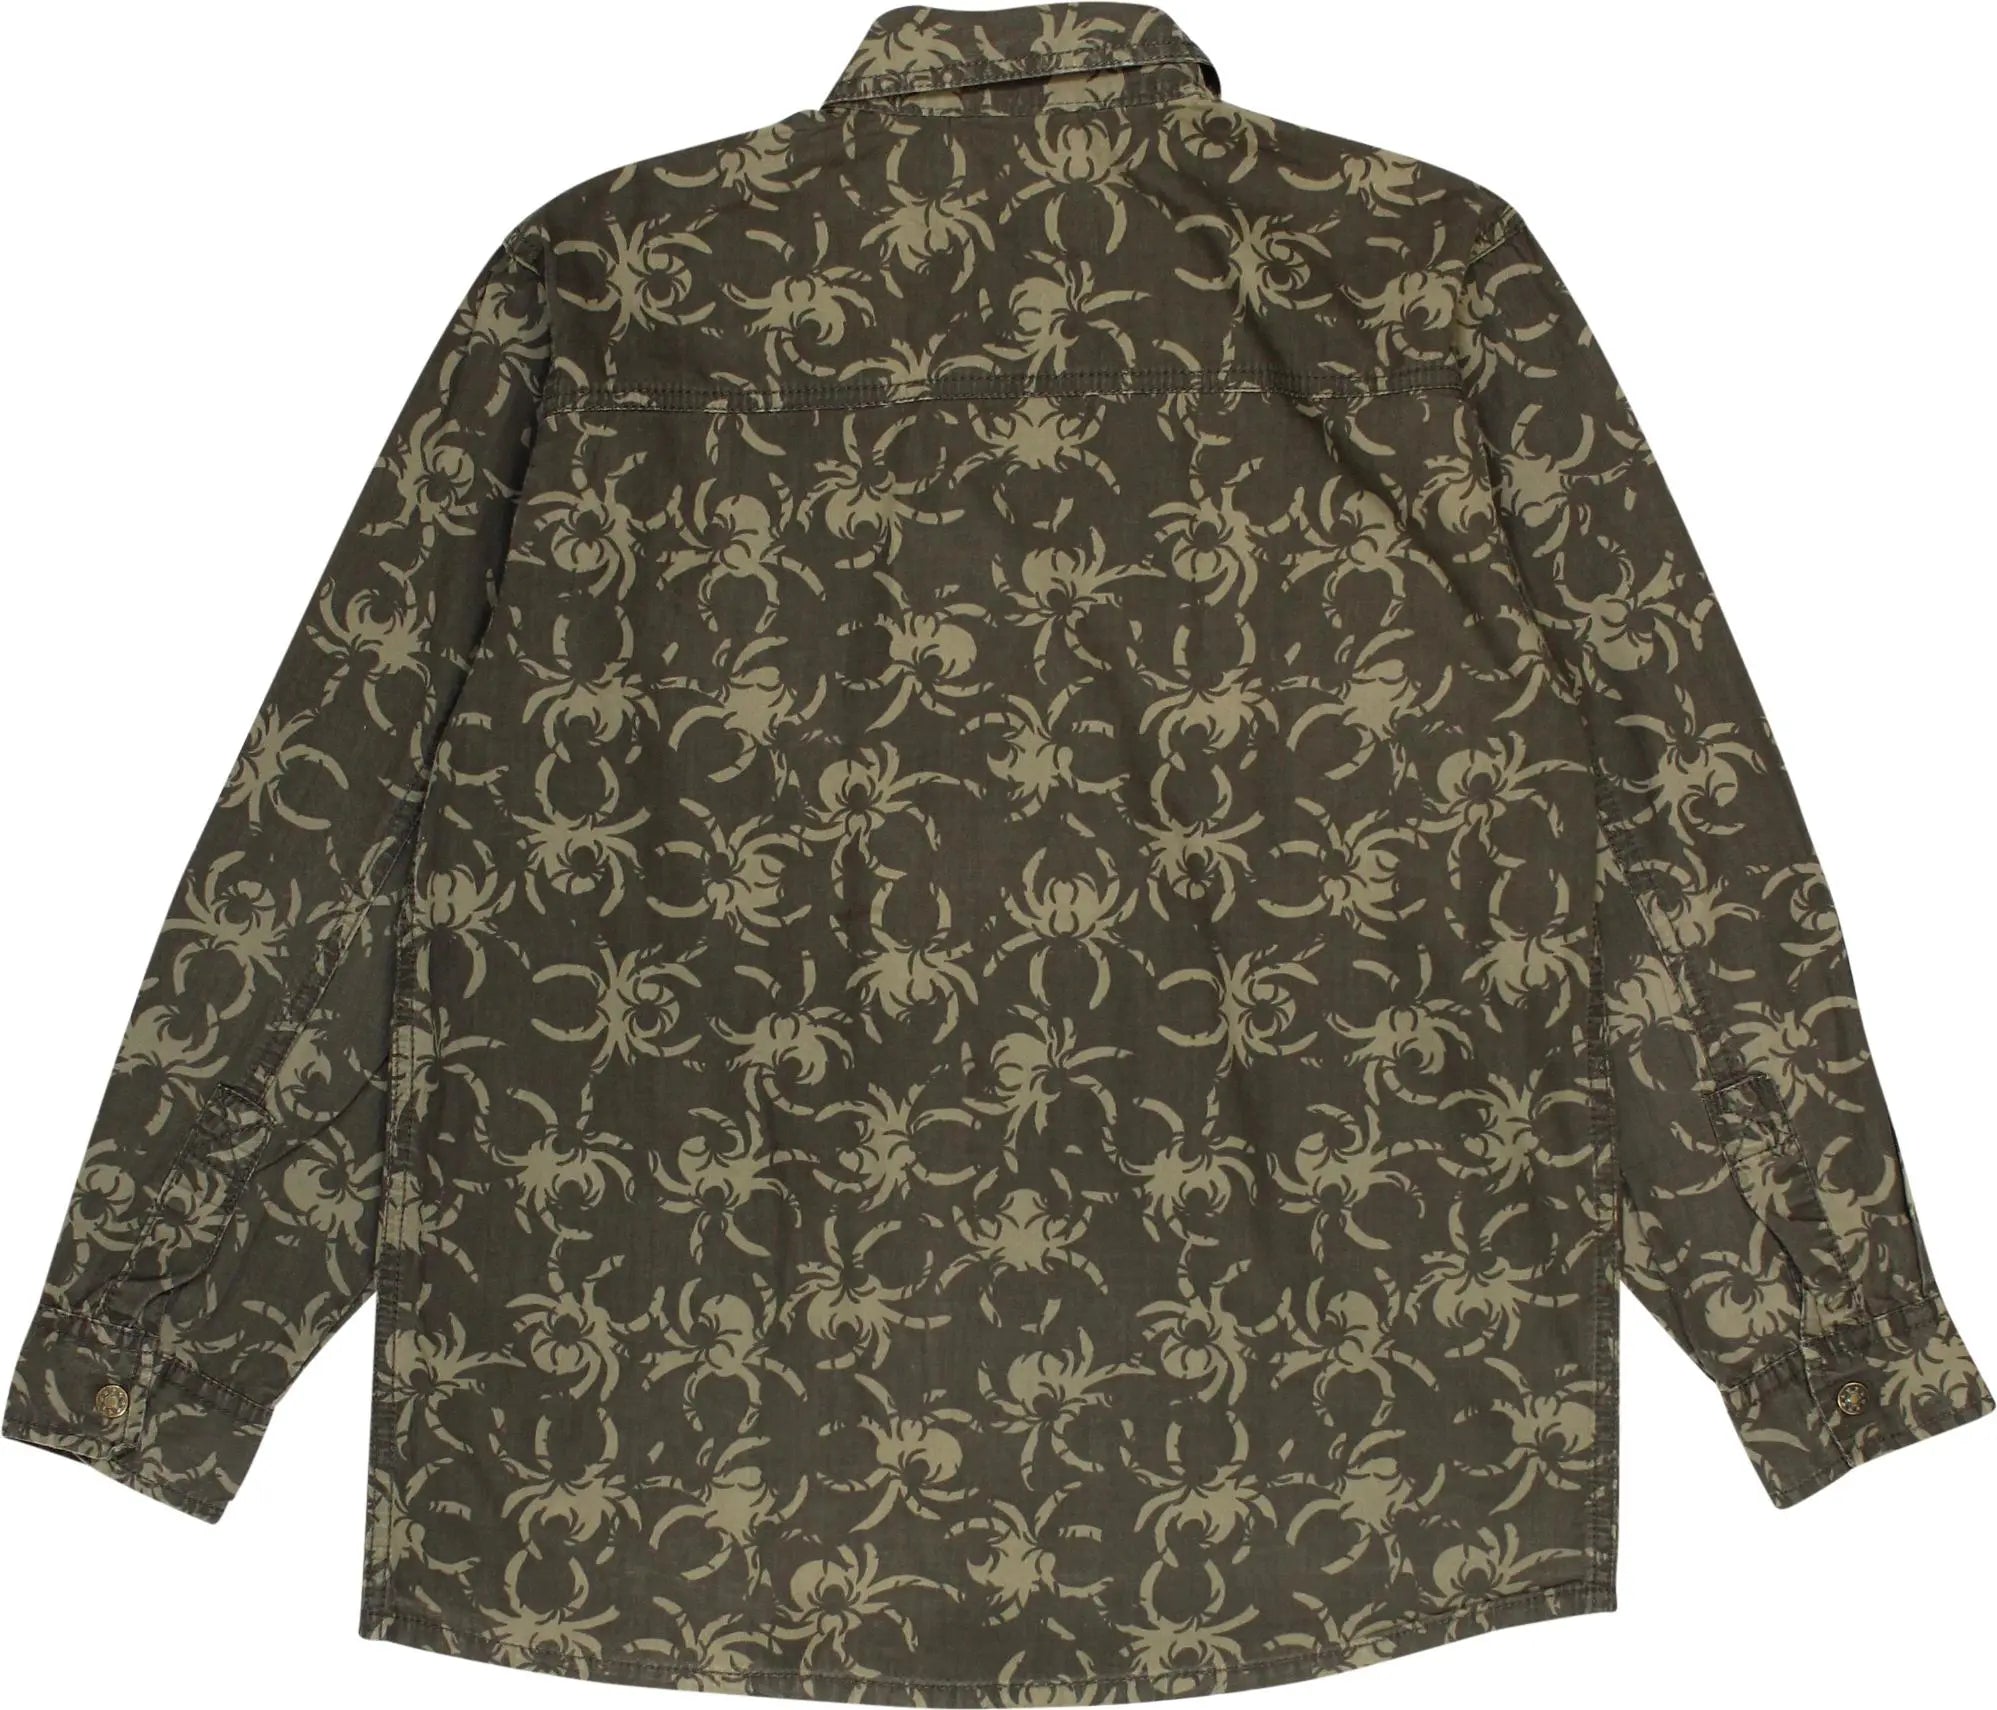 Yigga - Green Shirt- ThriftTale.com - Vintage and second handclothing